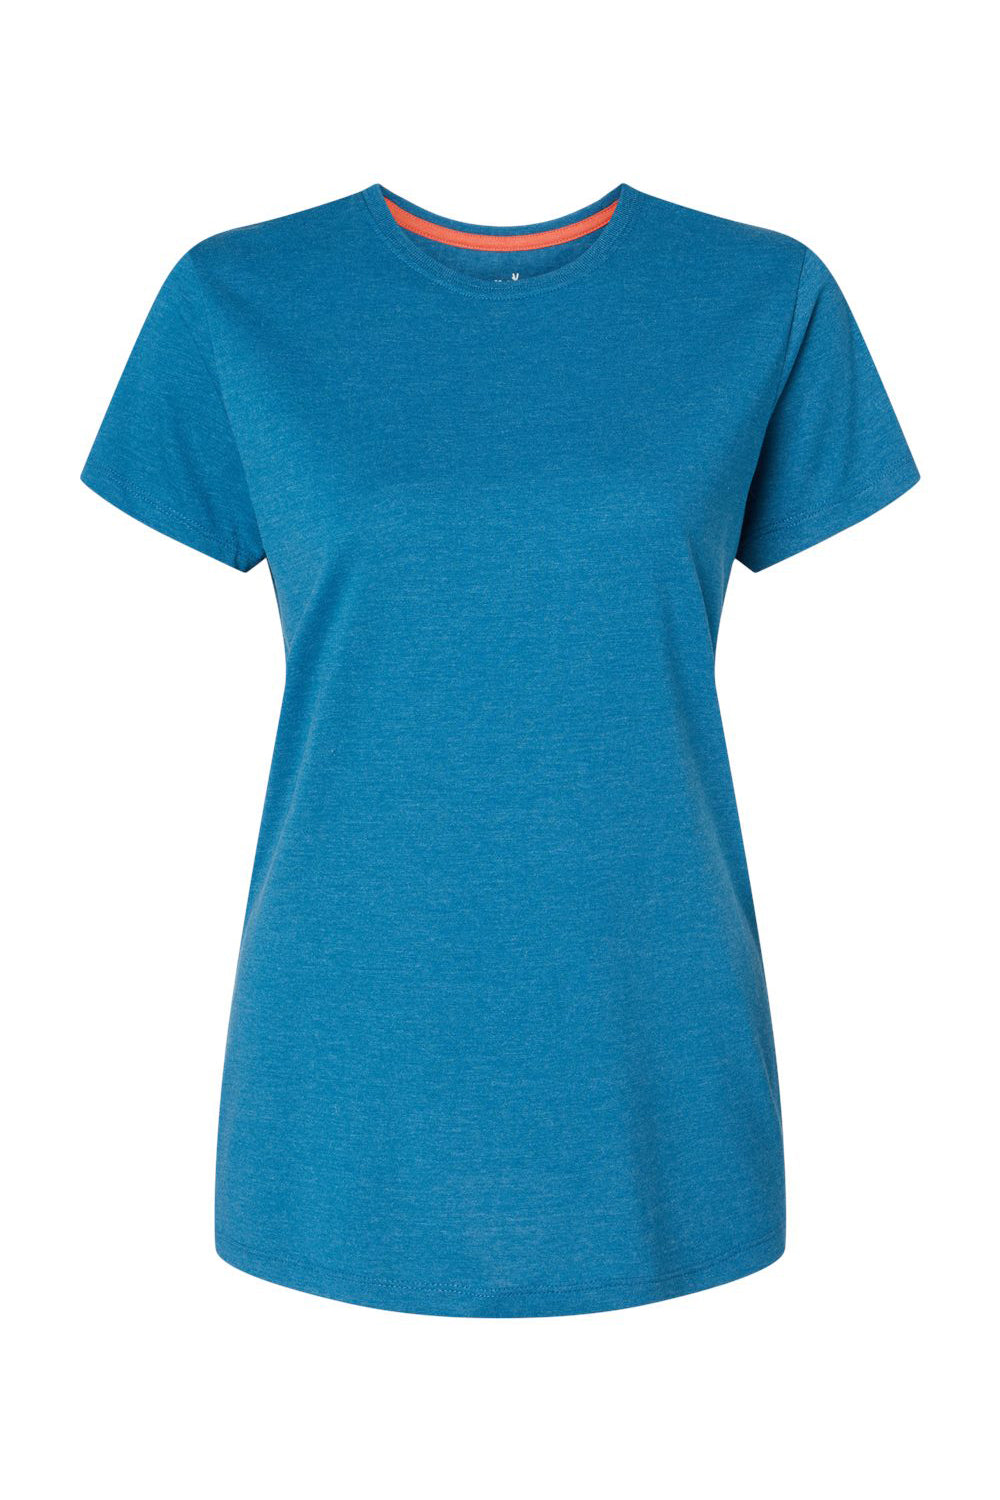 Kastlfel 2021 Womens RecycledSoft Short Sleeve Crewneck T-Shirt Breaker Blue Flat Front